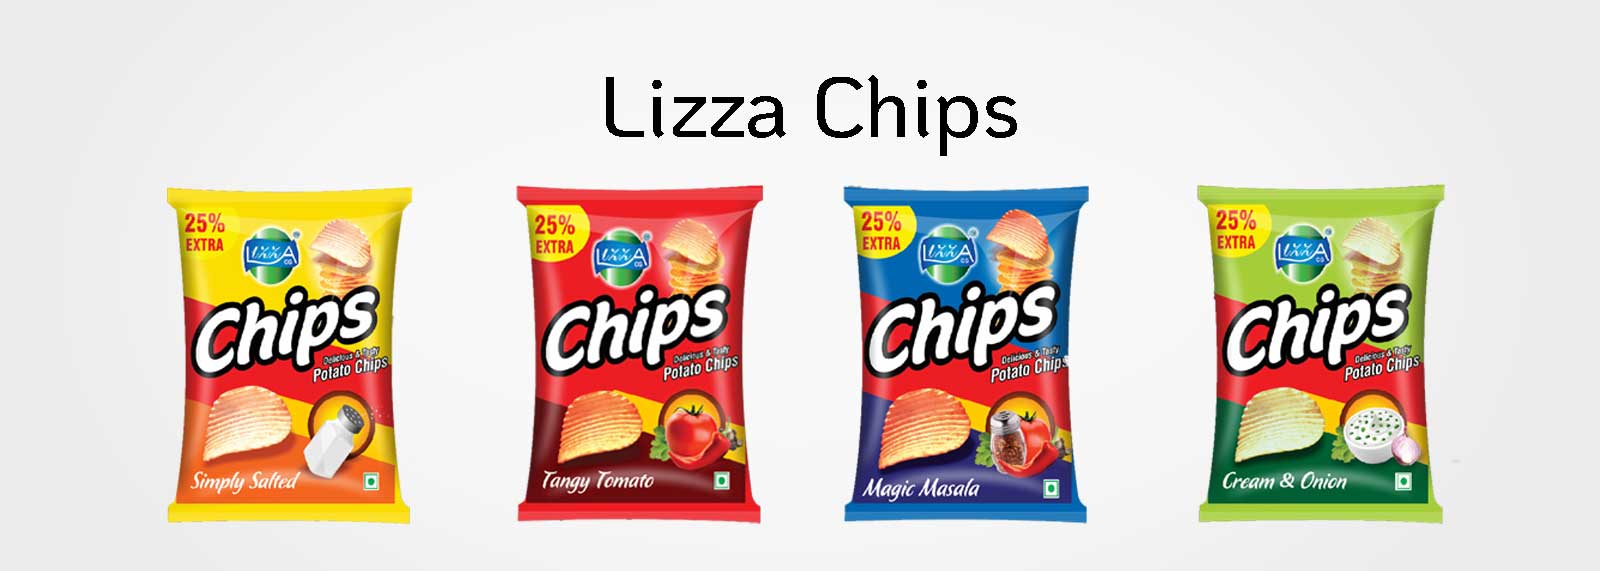 Lizaa Chips